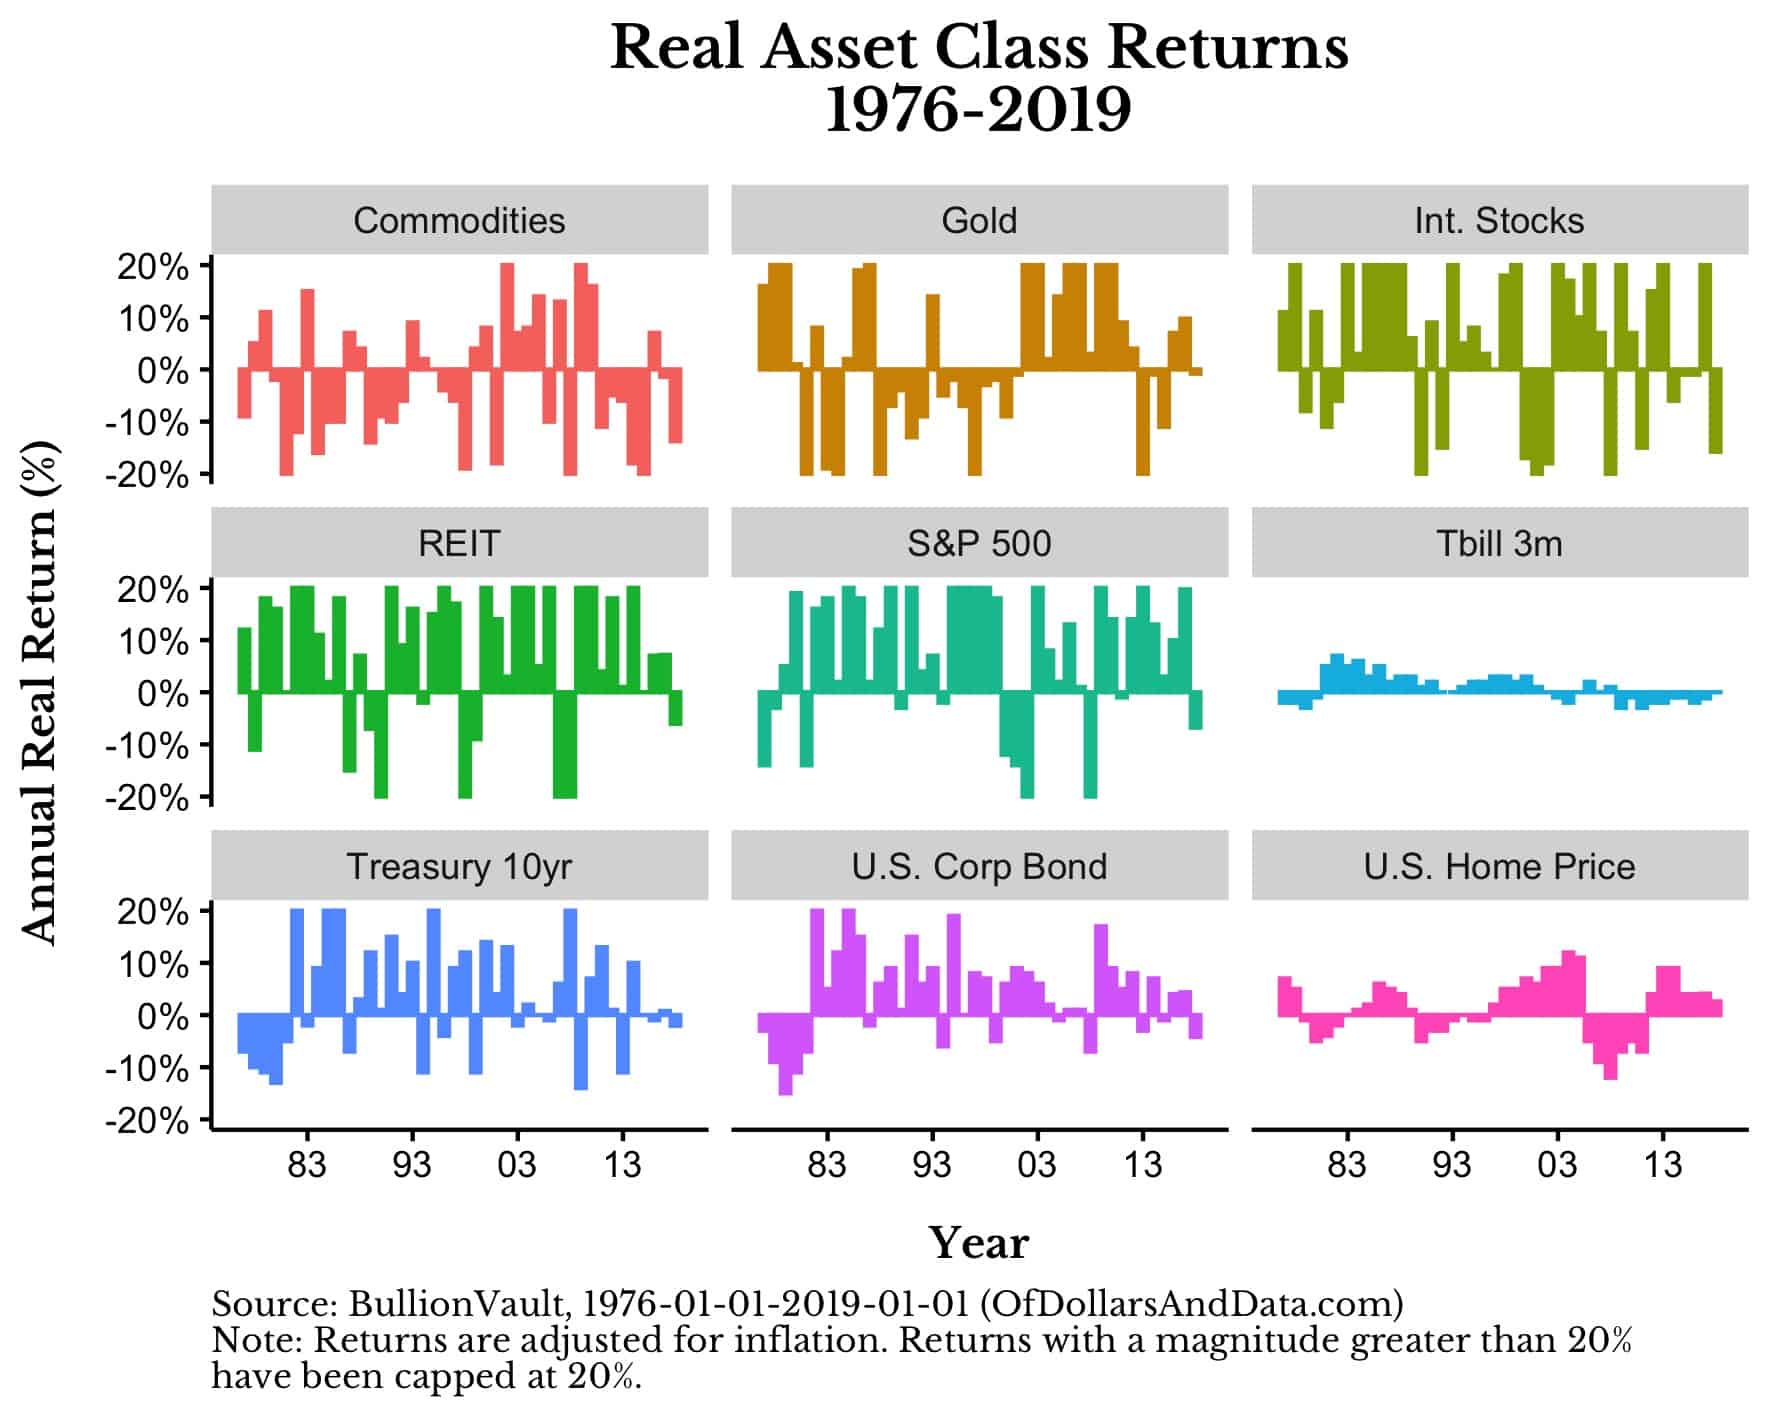 Real asset class returns for various asset classes, 1976-2019 